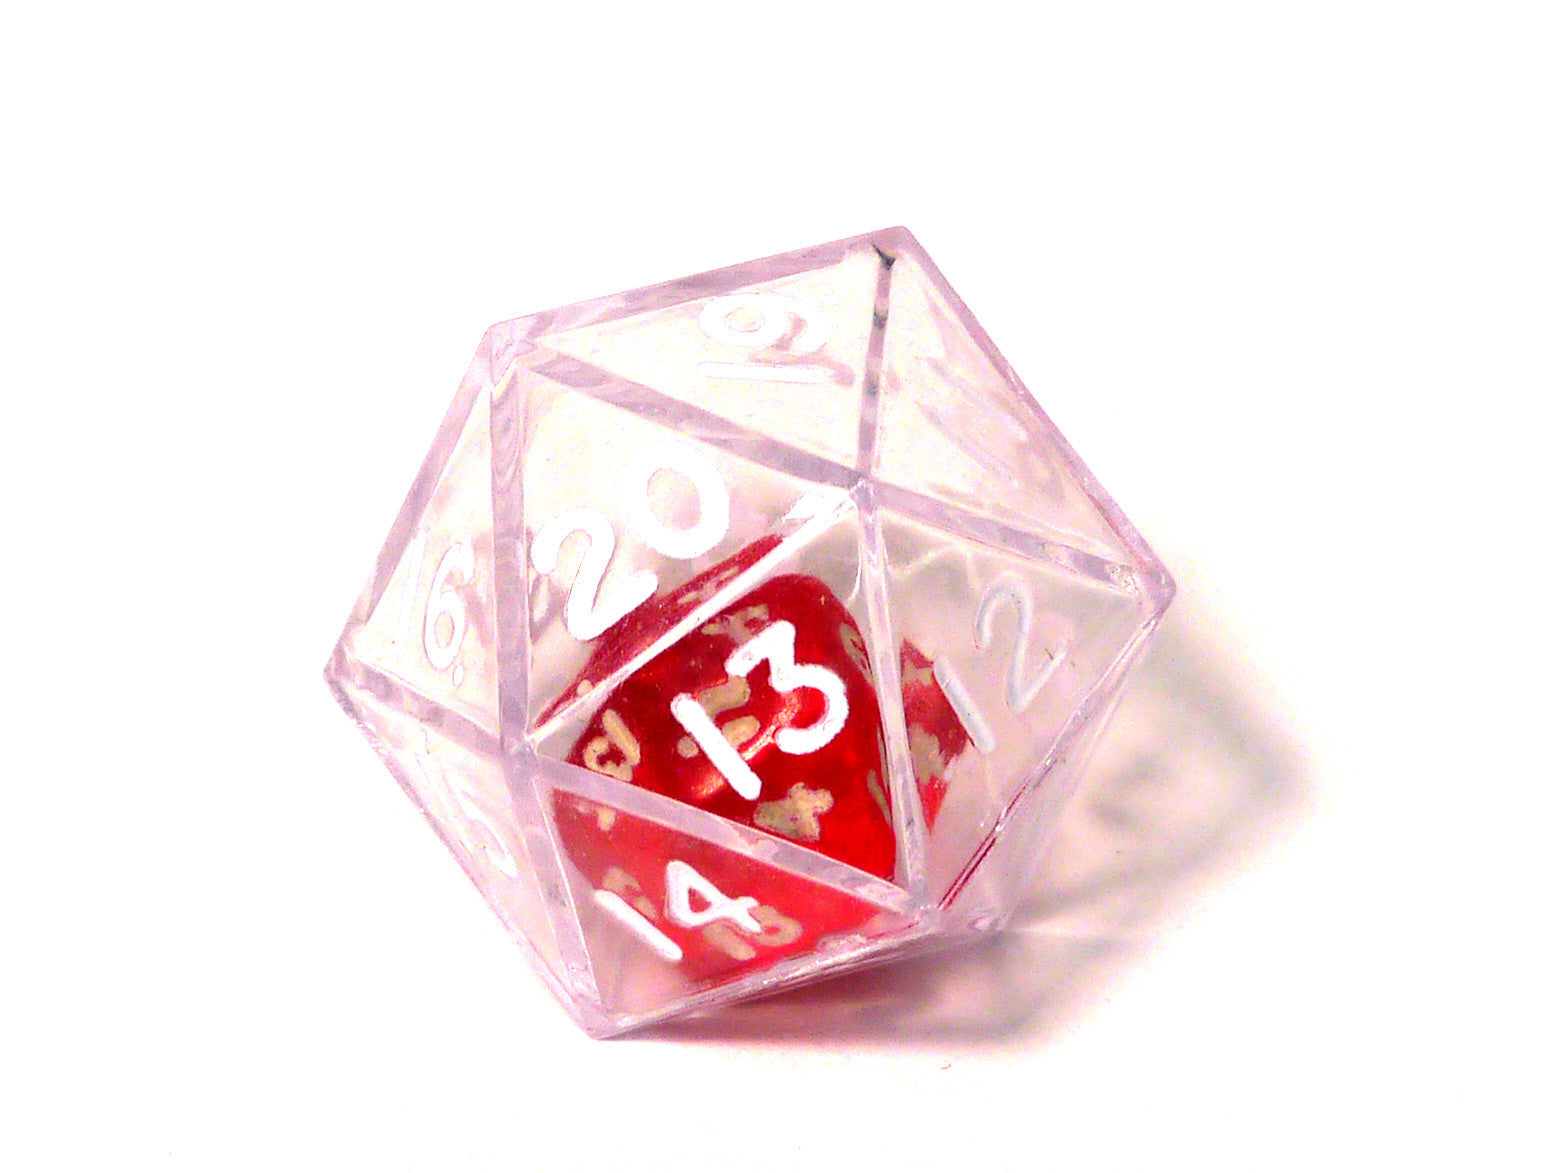 D20 inside a D20 dice